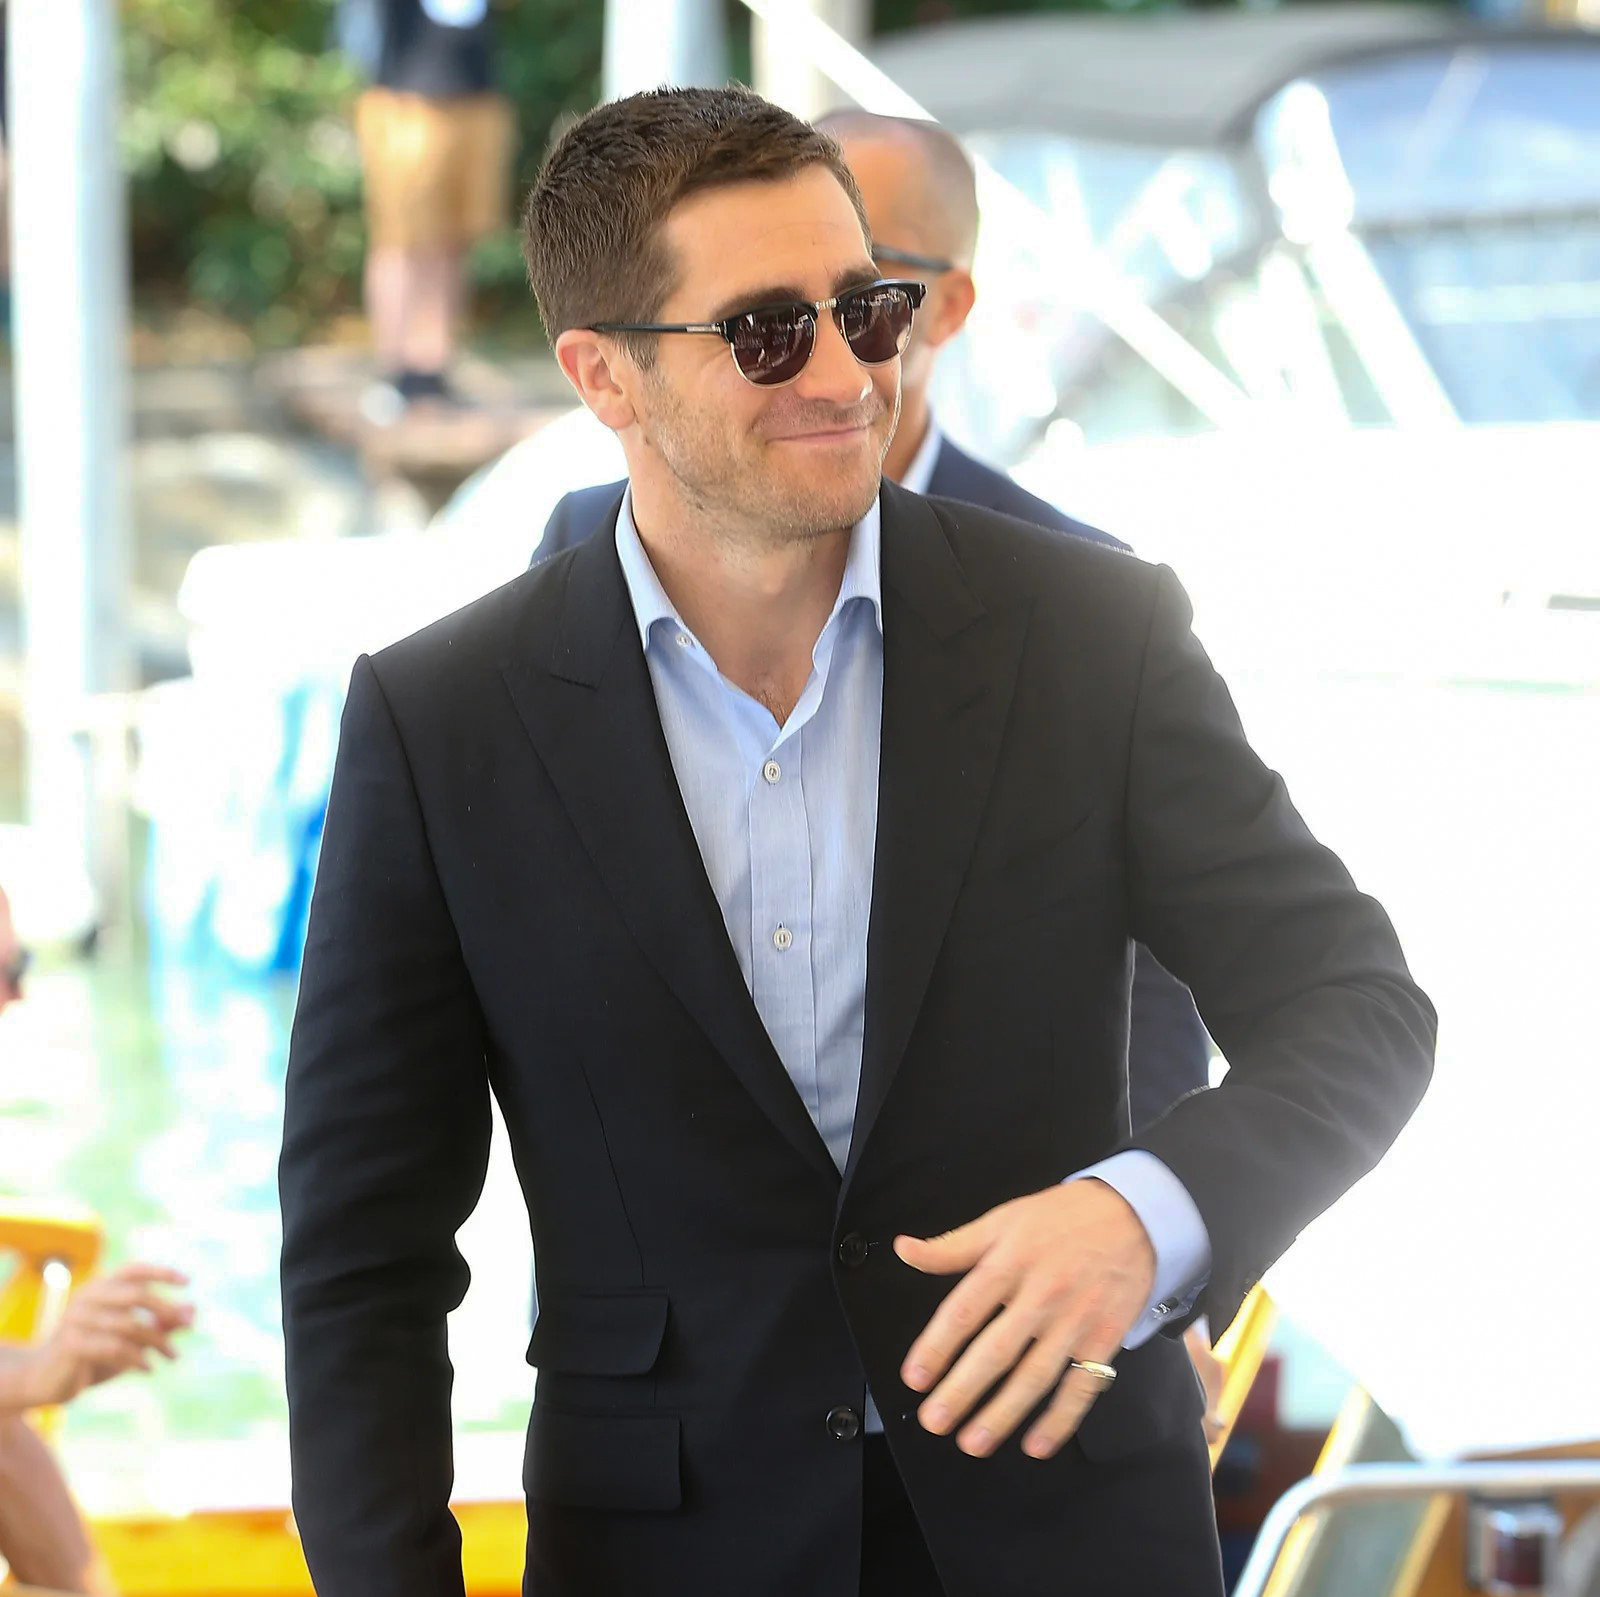 jake gyllenhaal matches semi-rimless sunglasses